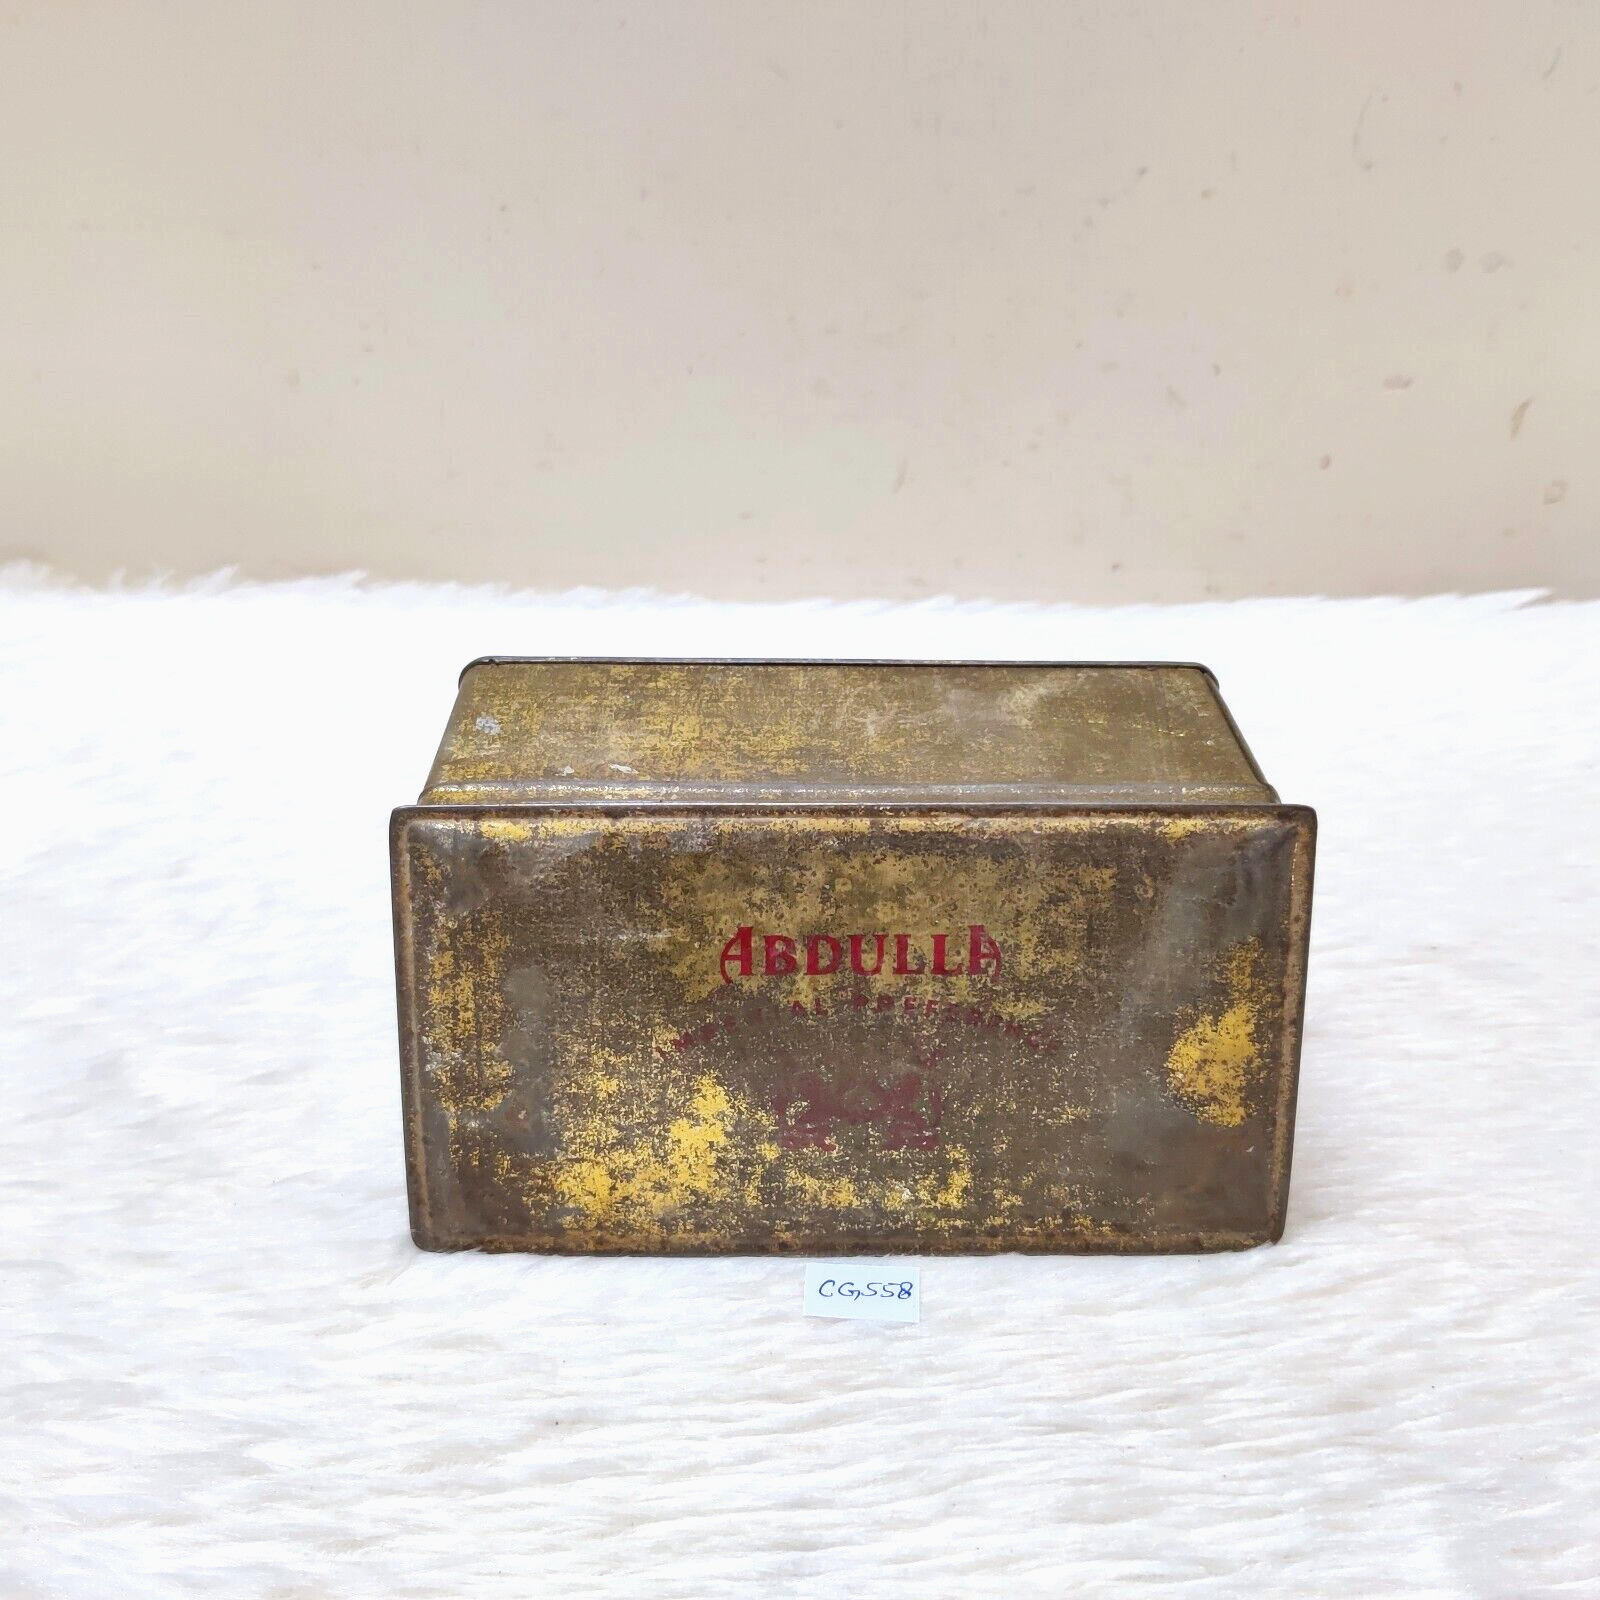 1940s Vintage Abdulla Imperial Cigarette Advertising Litho Tin Box England CG558